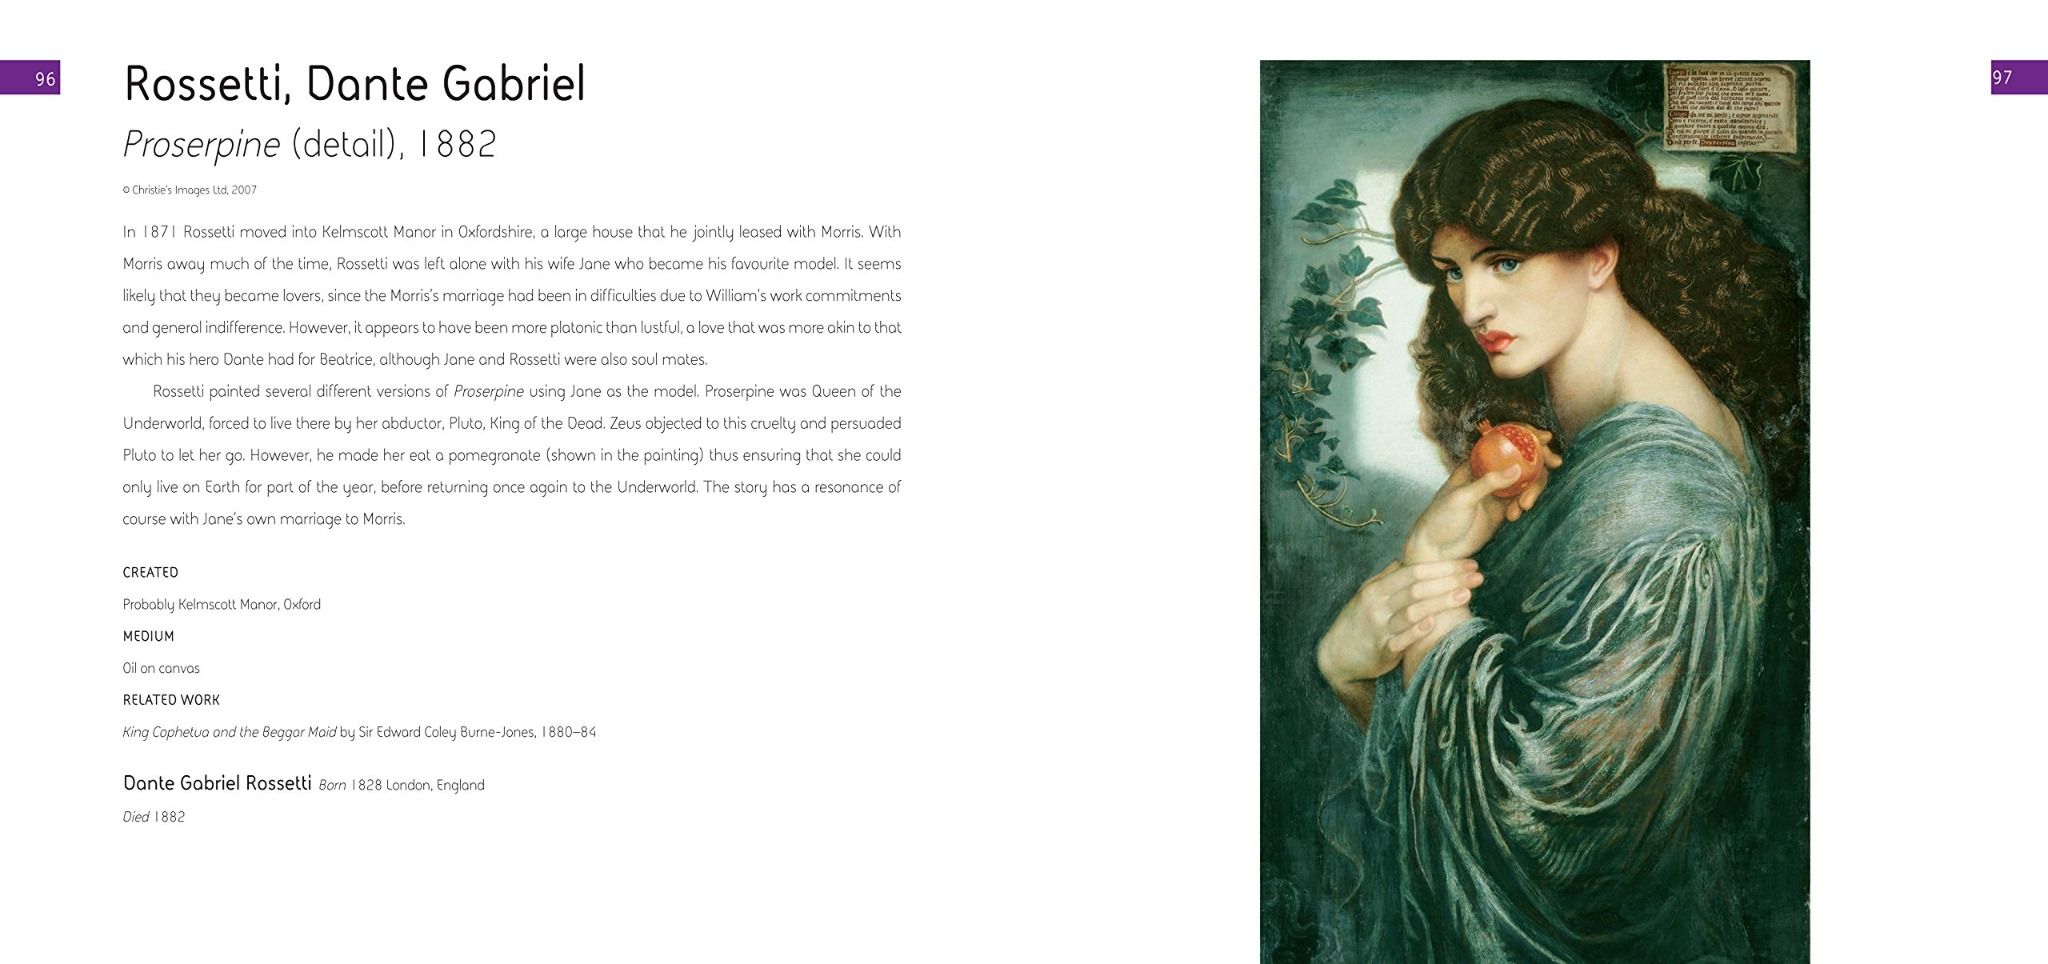  The Pre-Raphaelites_Michael Robinson, Yvonna Januszewska_9781786644800_Flame Tree Publishing 